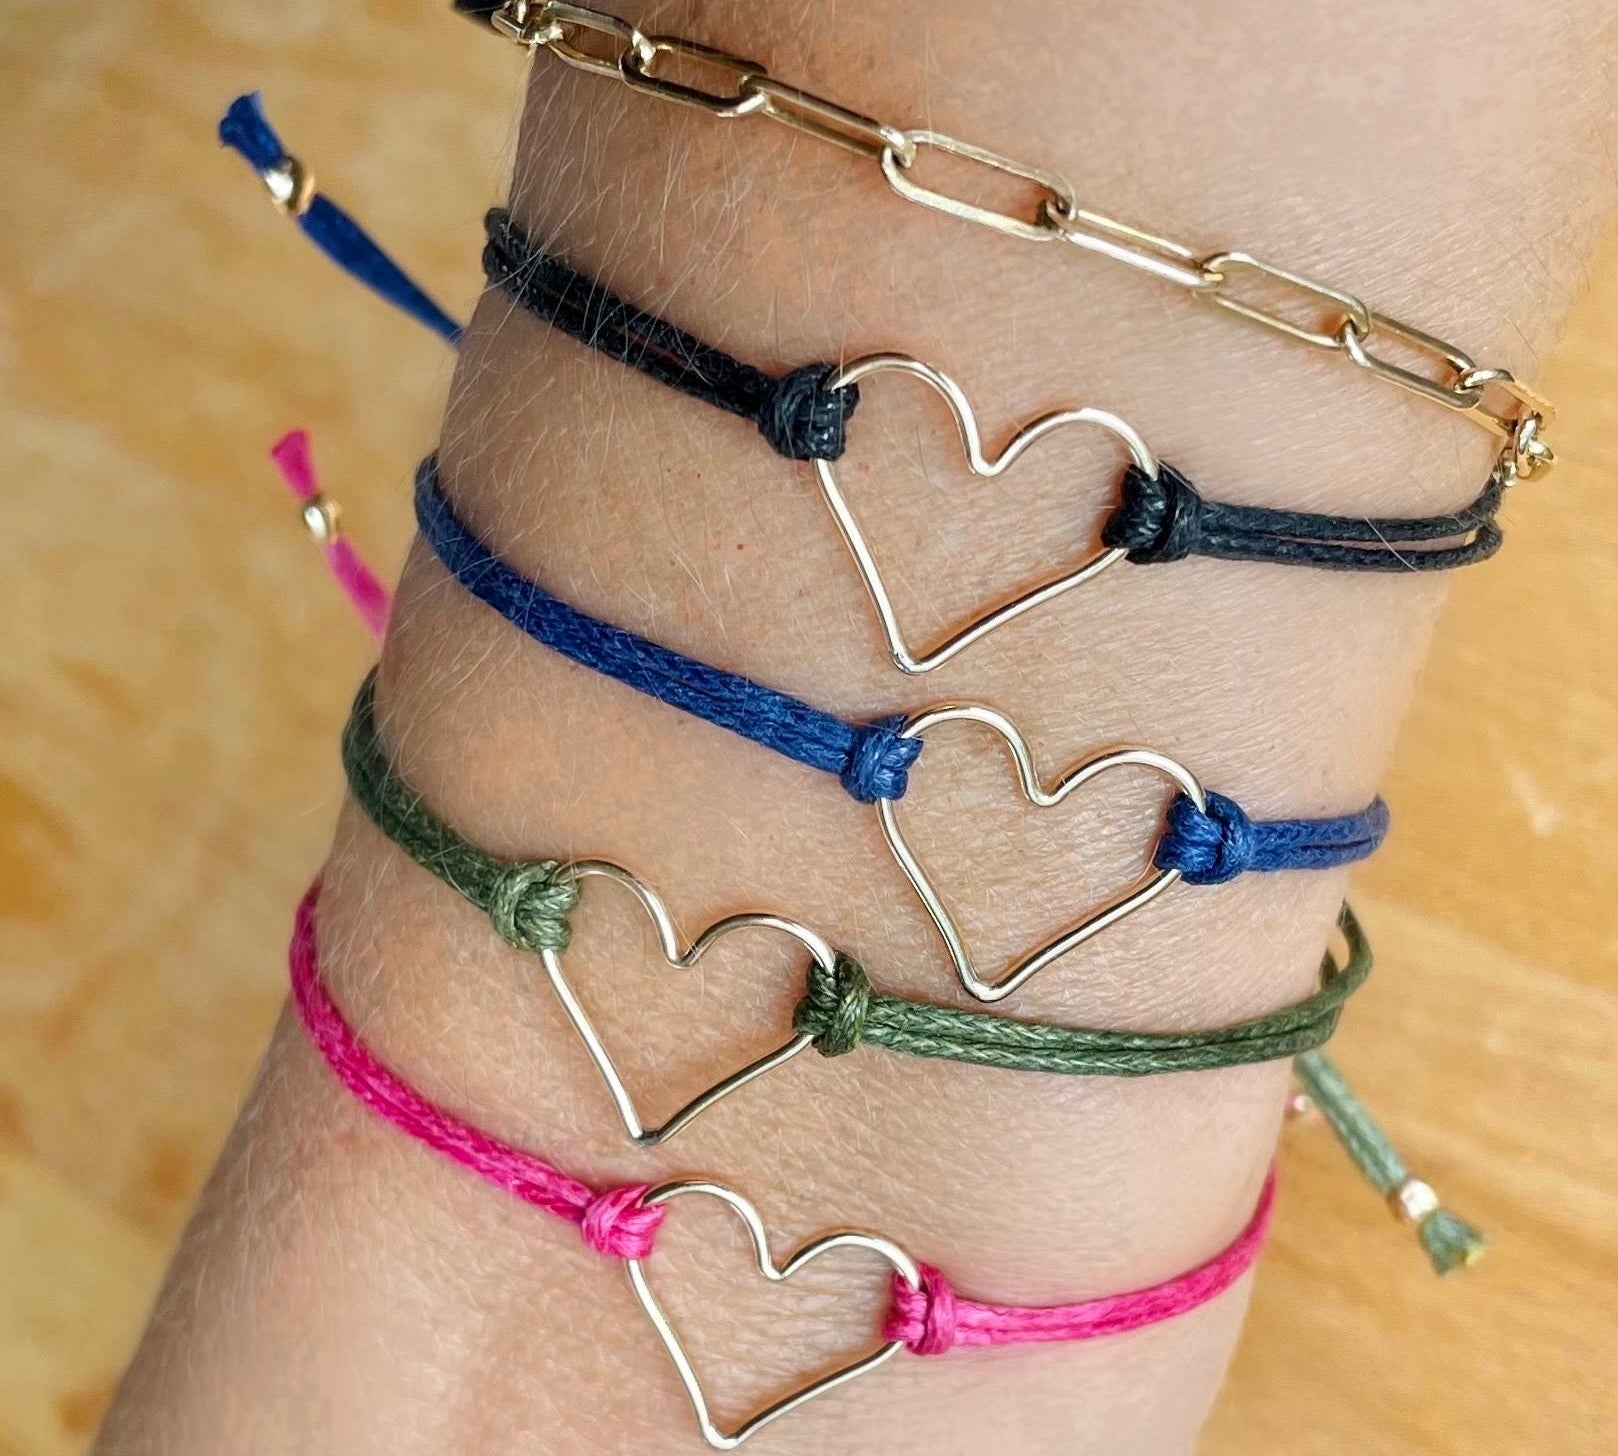 Jewel Tones 'Armed with Love' Bracelets, shown on model